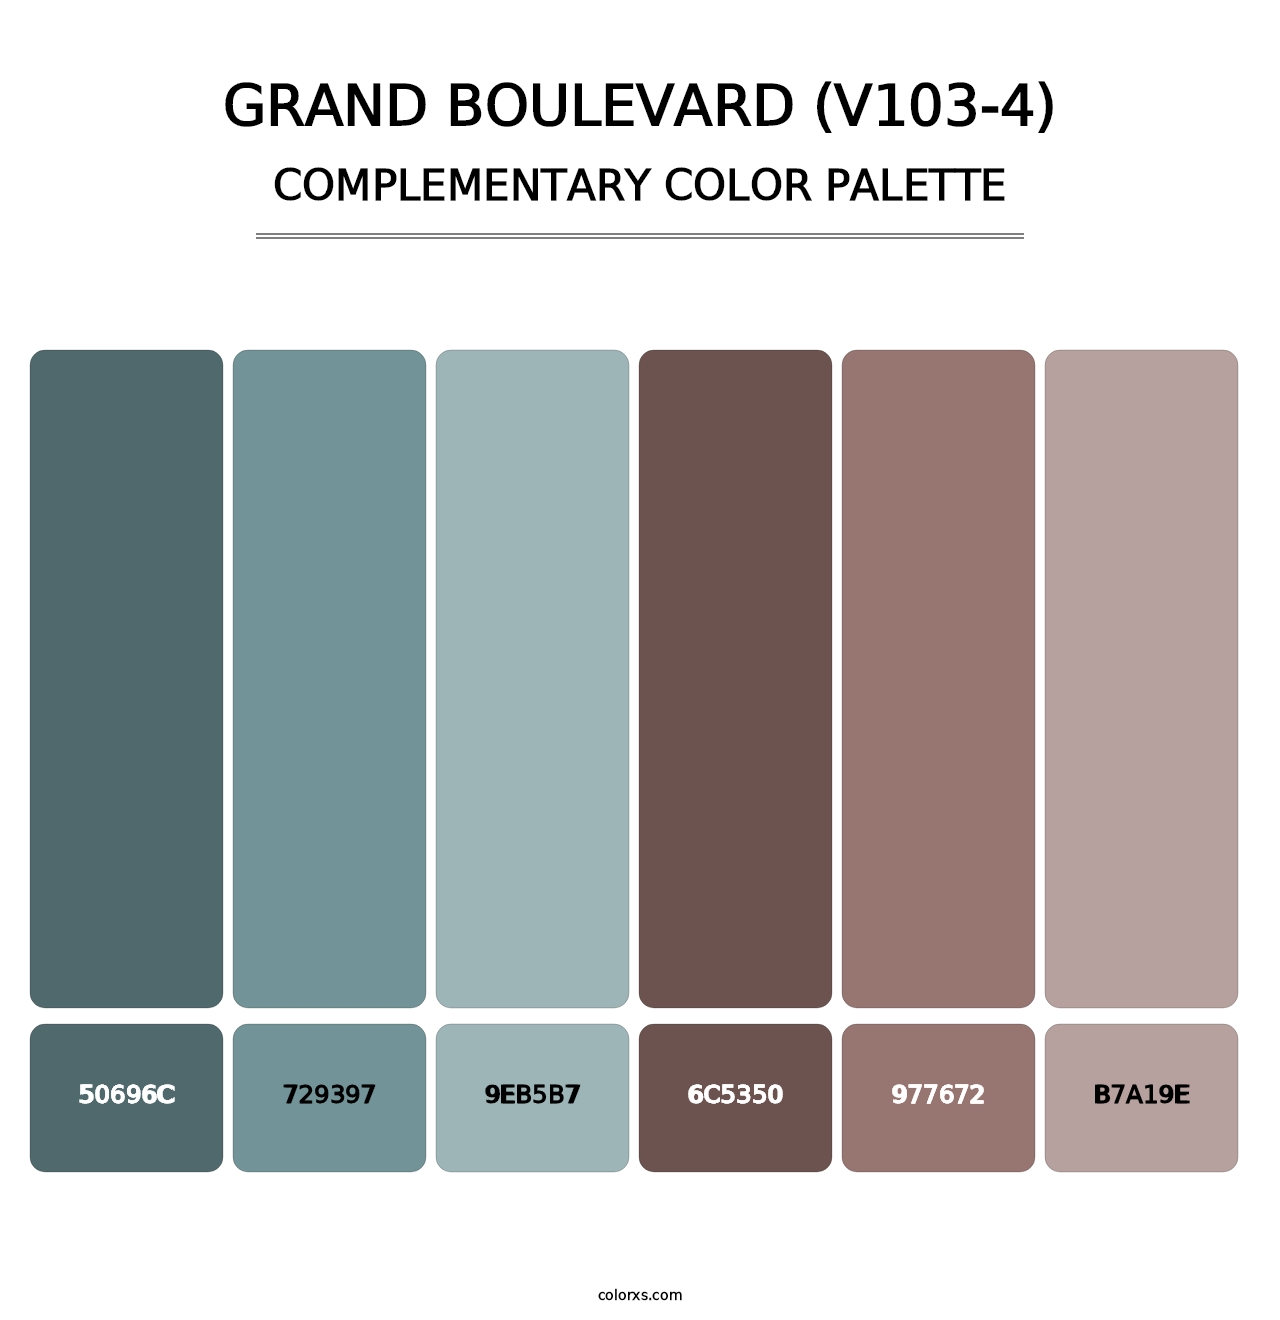 Grand Boulevard (V103-4) - Complementary Color Palette